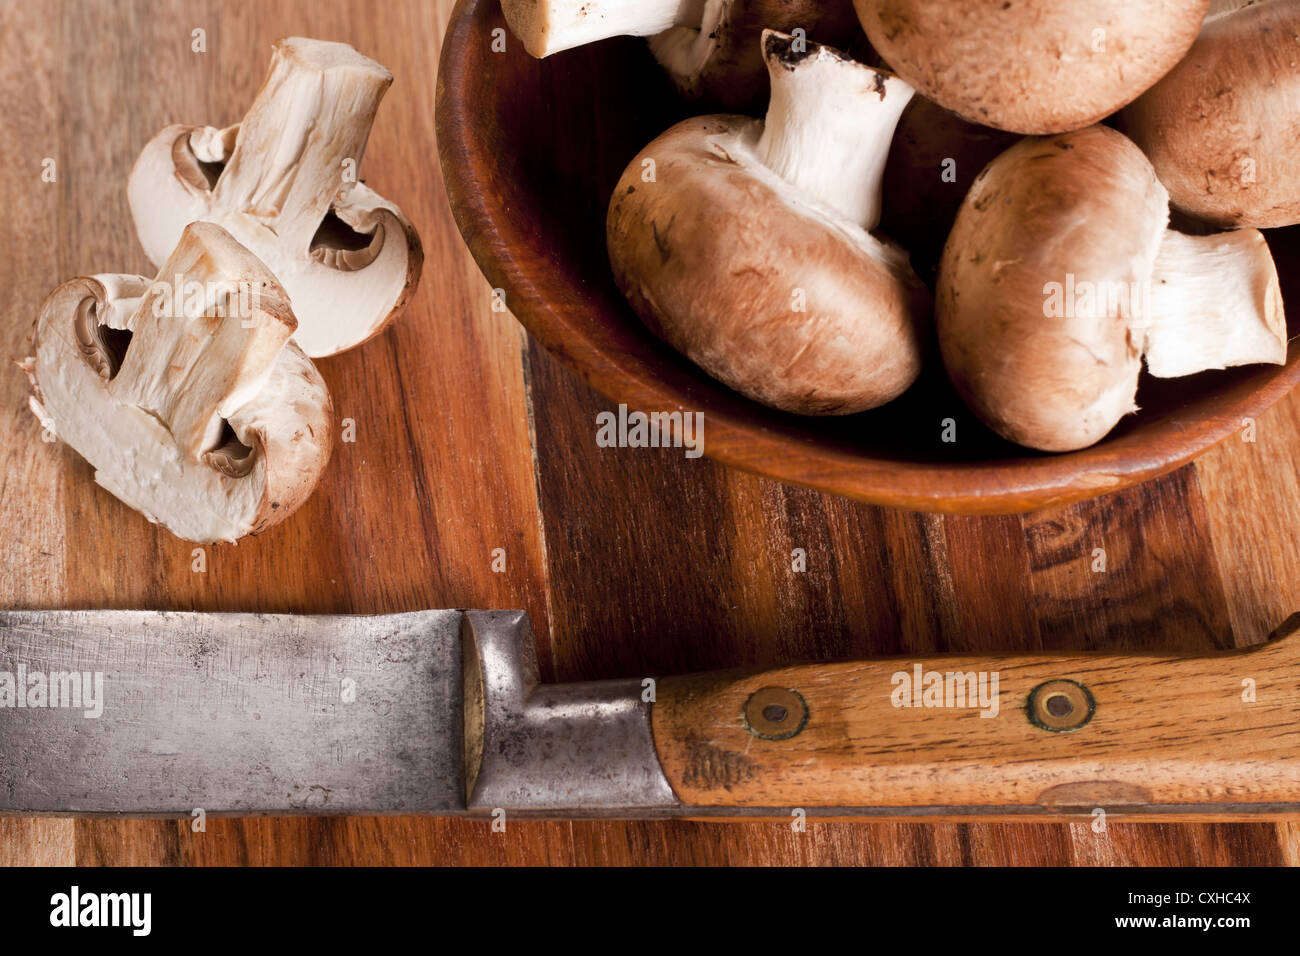 Chestnut mushrooms. Stock Photo